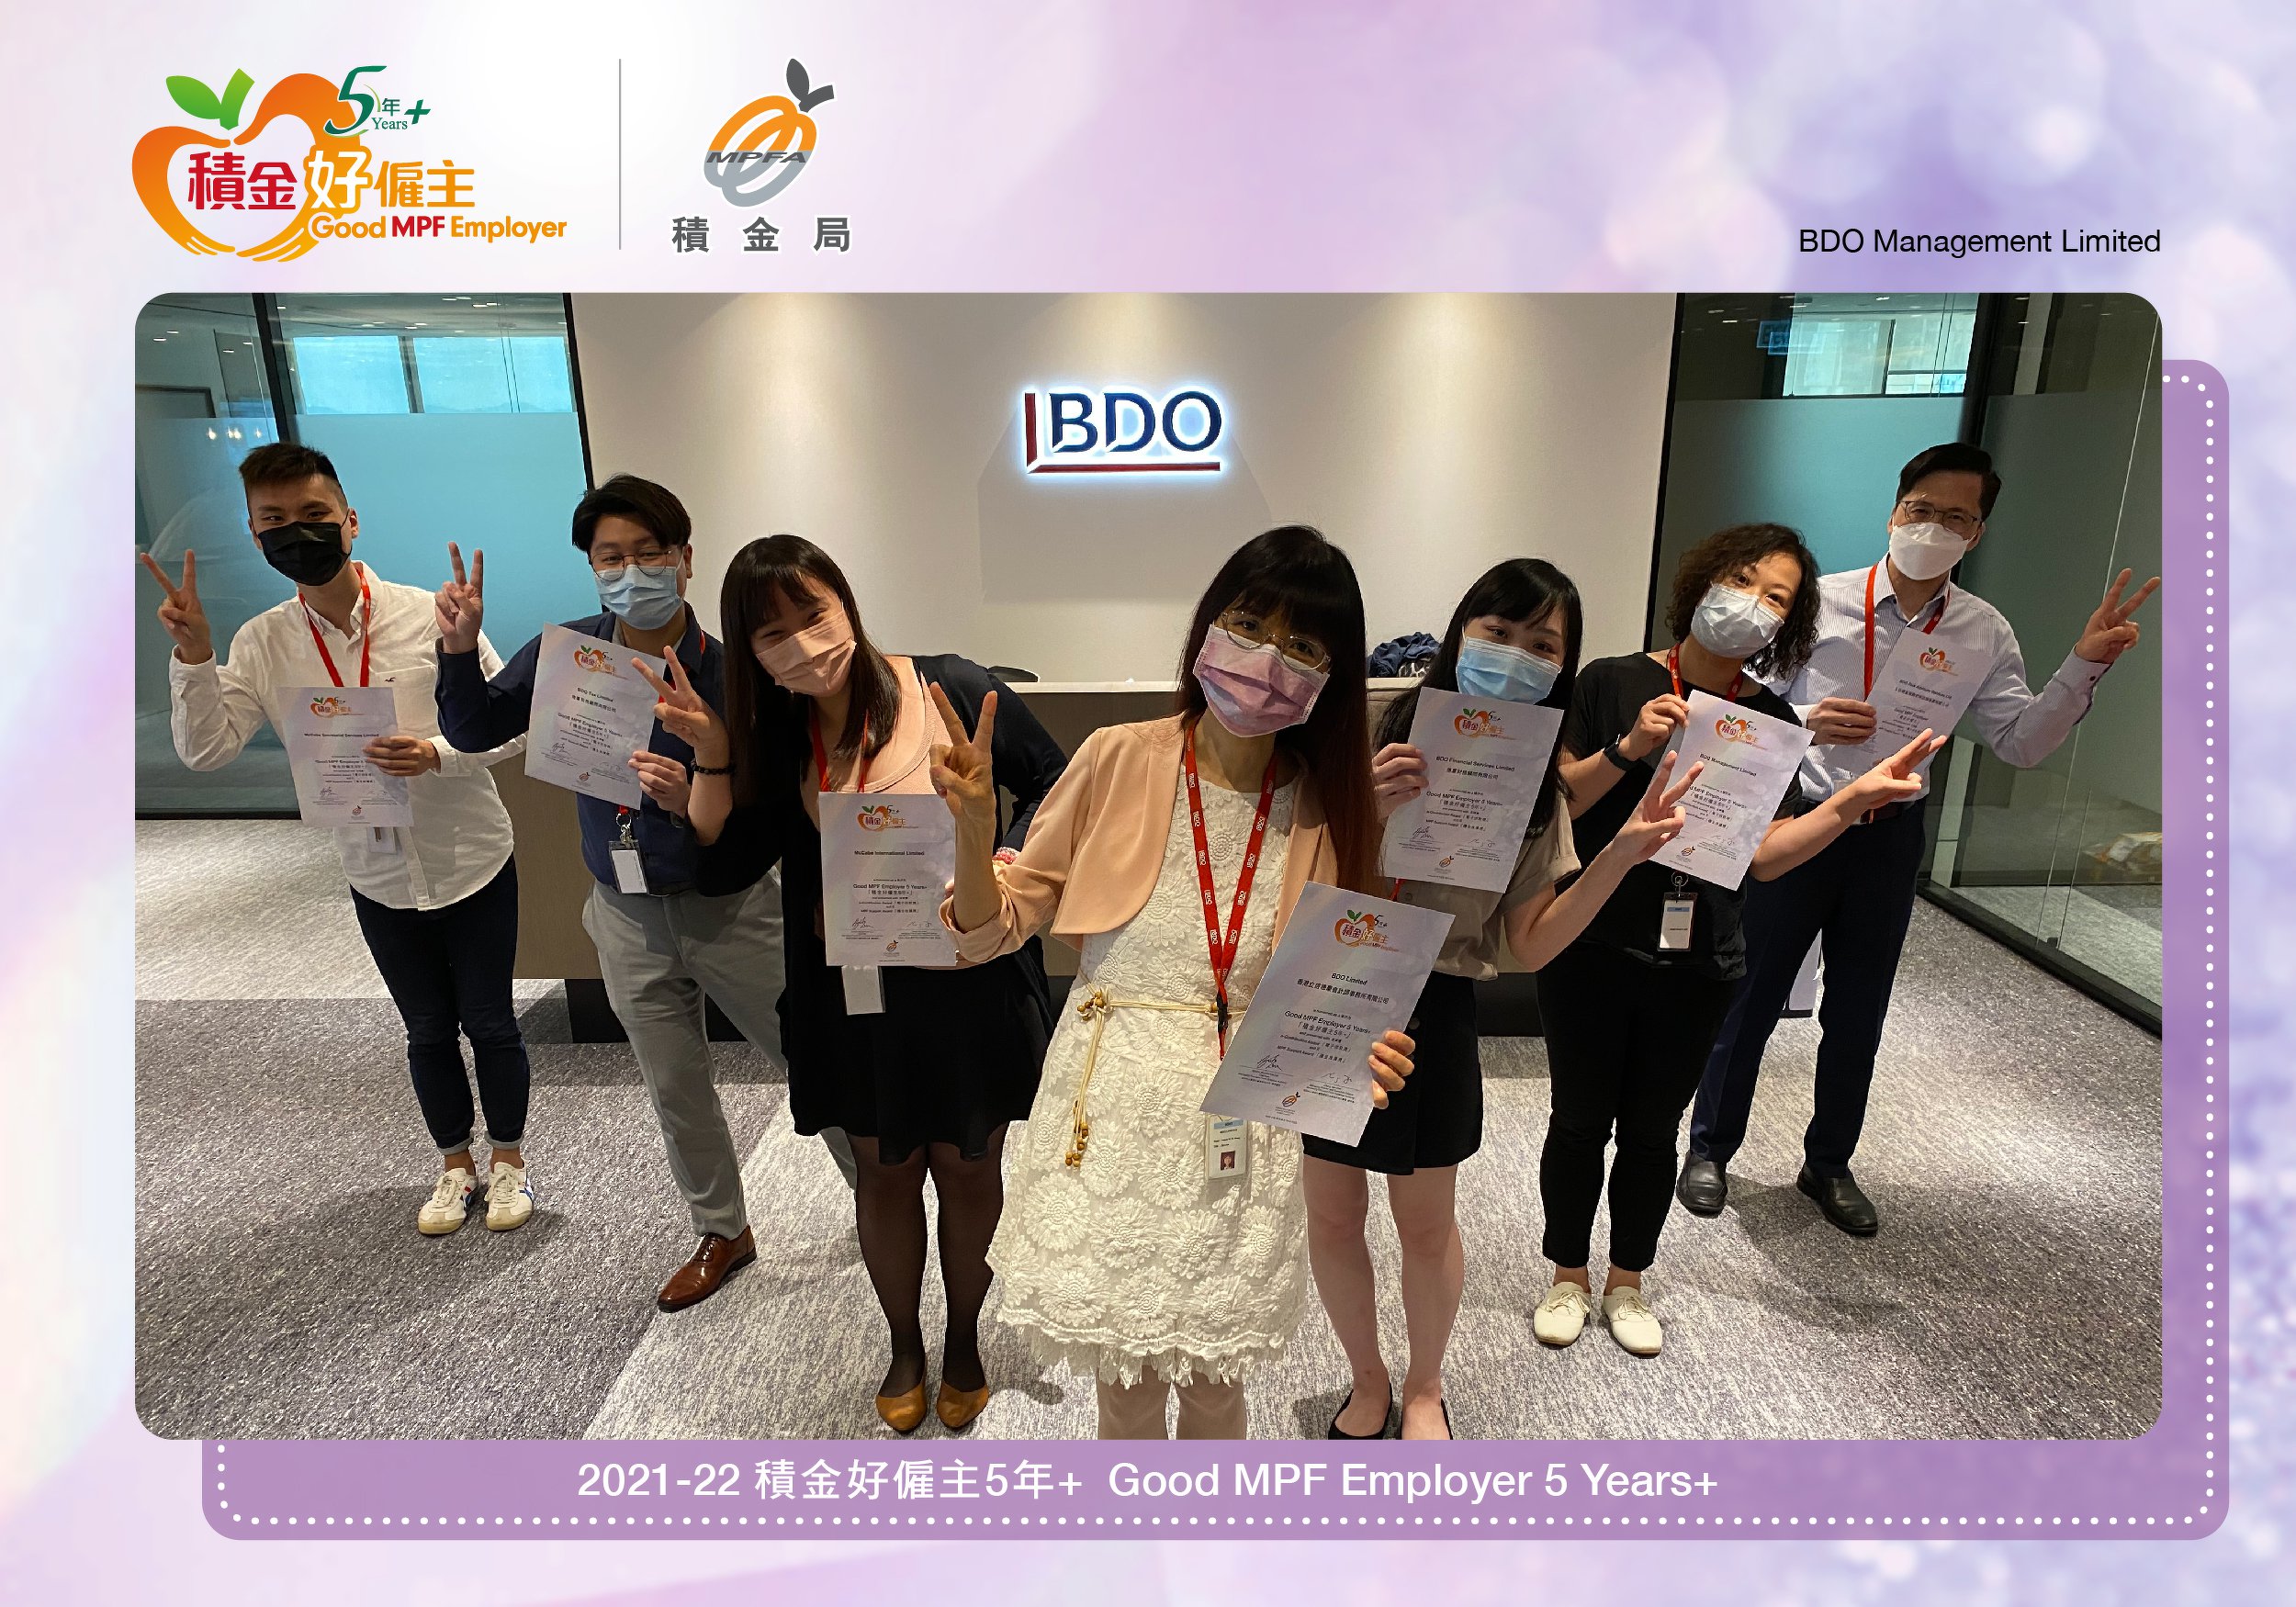 BDO Management Limited